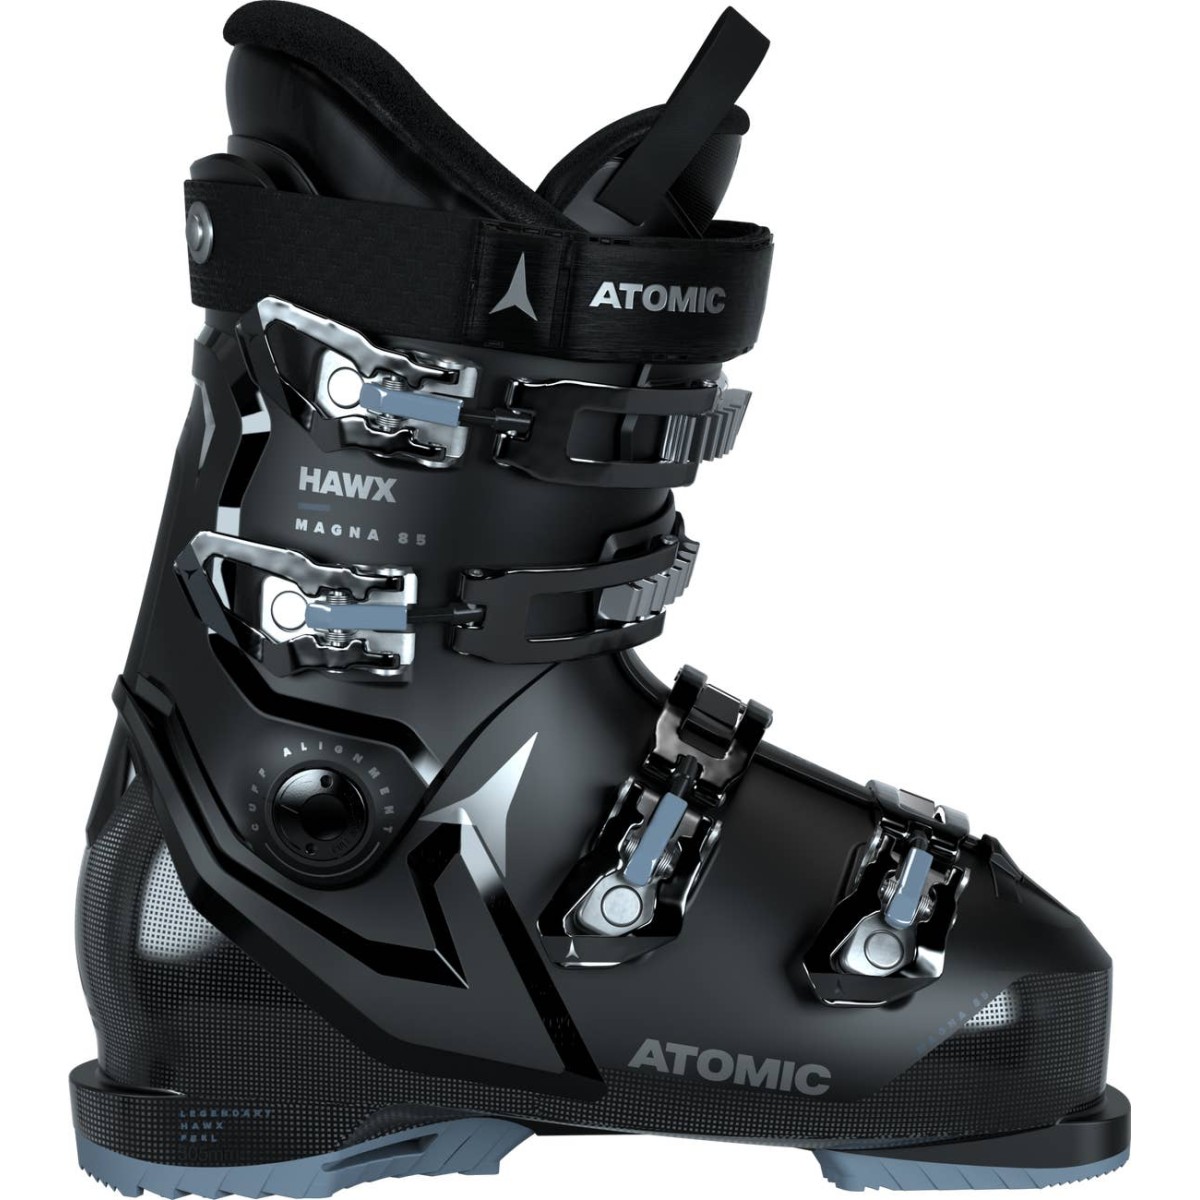 ATOMIC HAWX MAGNA 85 W kalnu slēpošanas zābaki - black